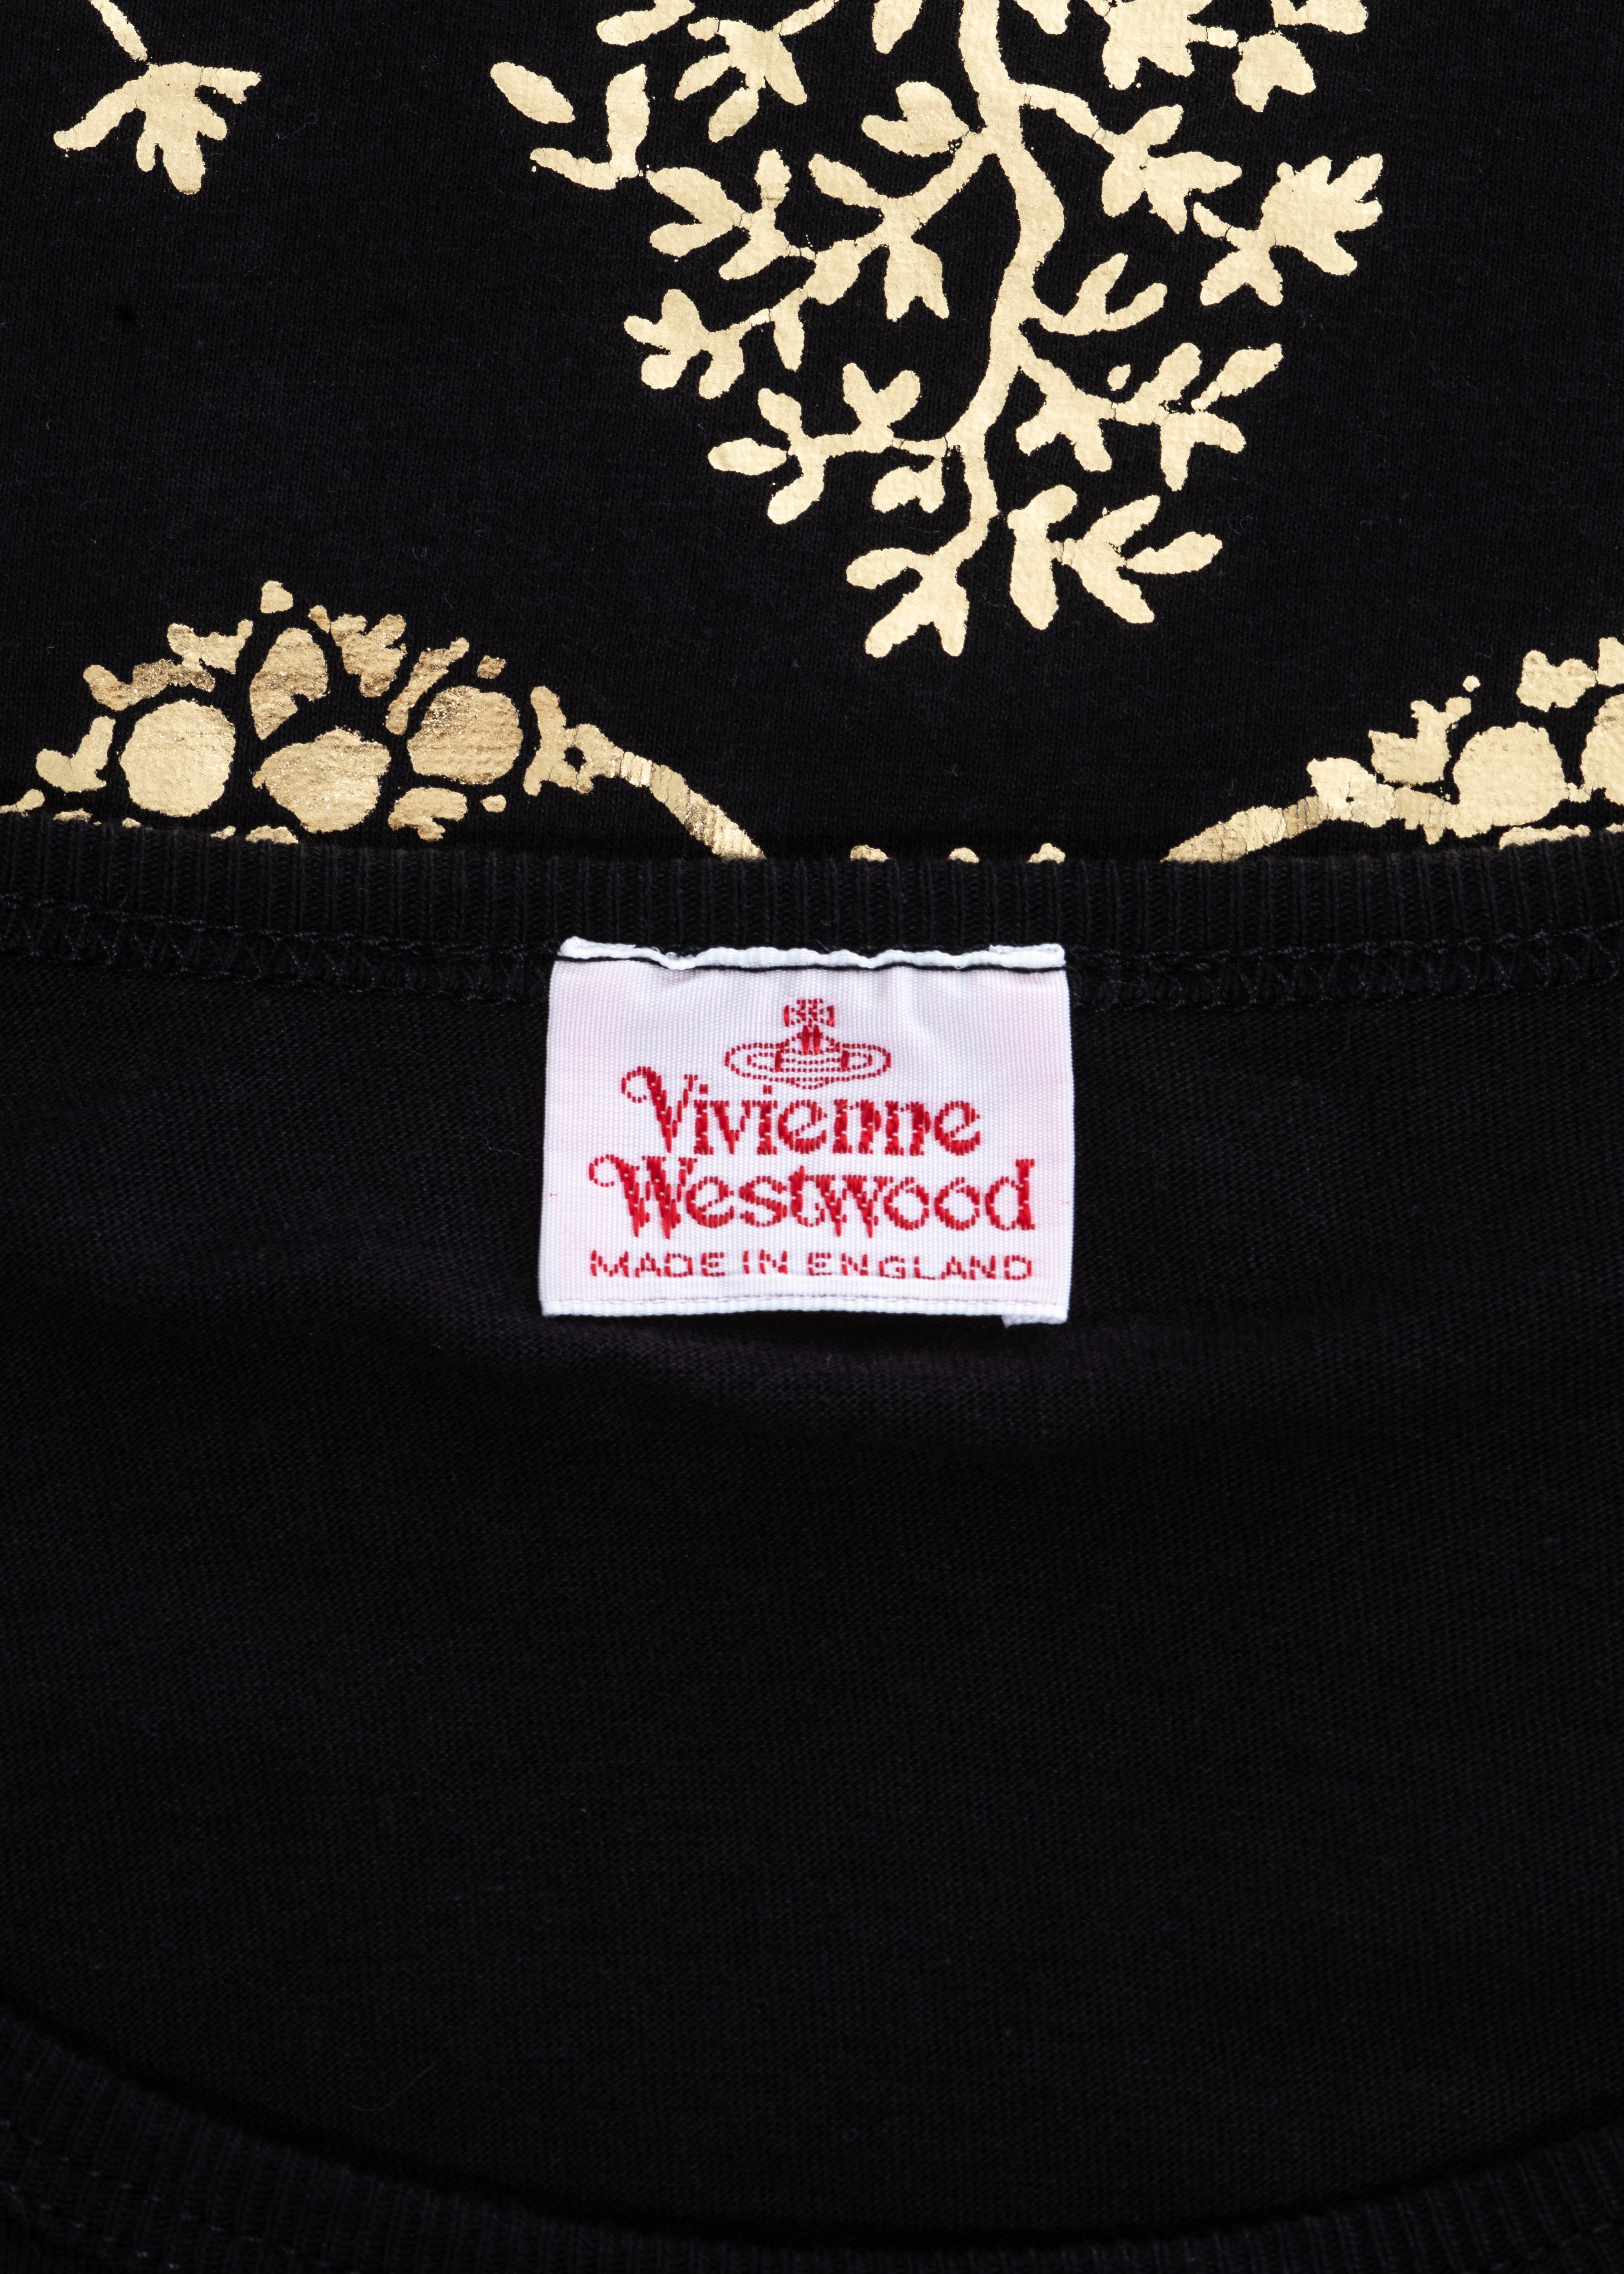 Men's Vivienne Westwood black cotton t-shirt with metallic gold print, fw 1990 For Sale 3